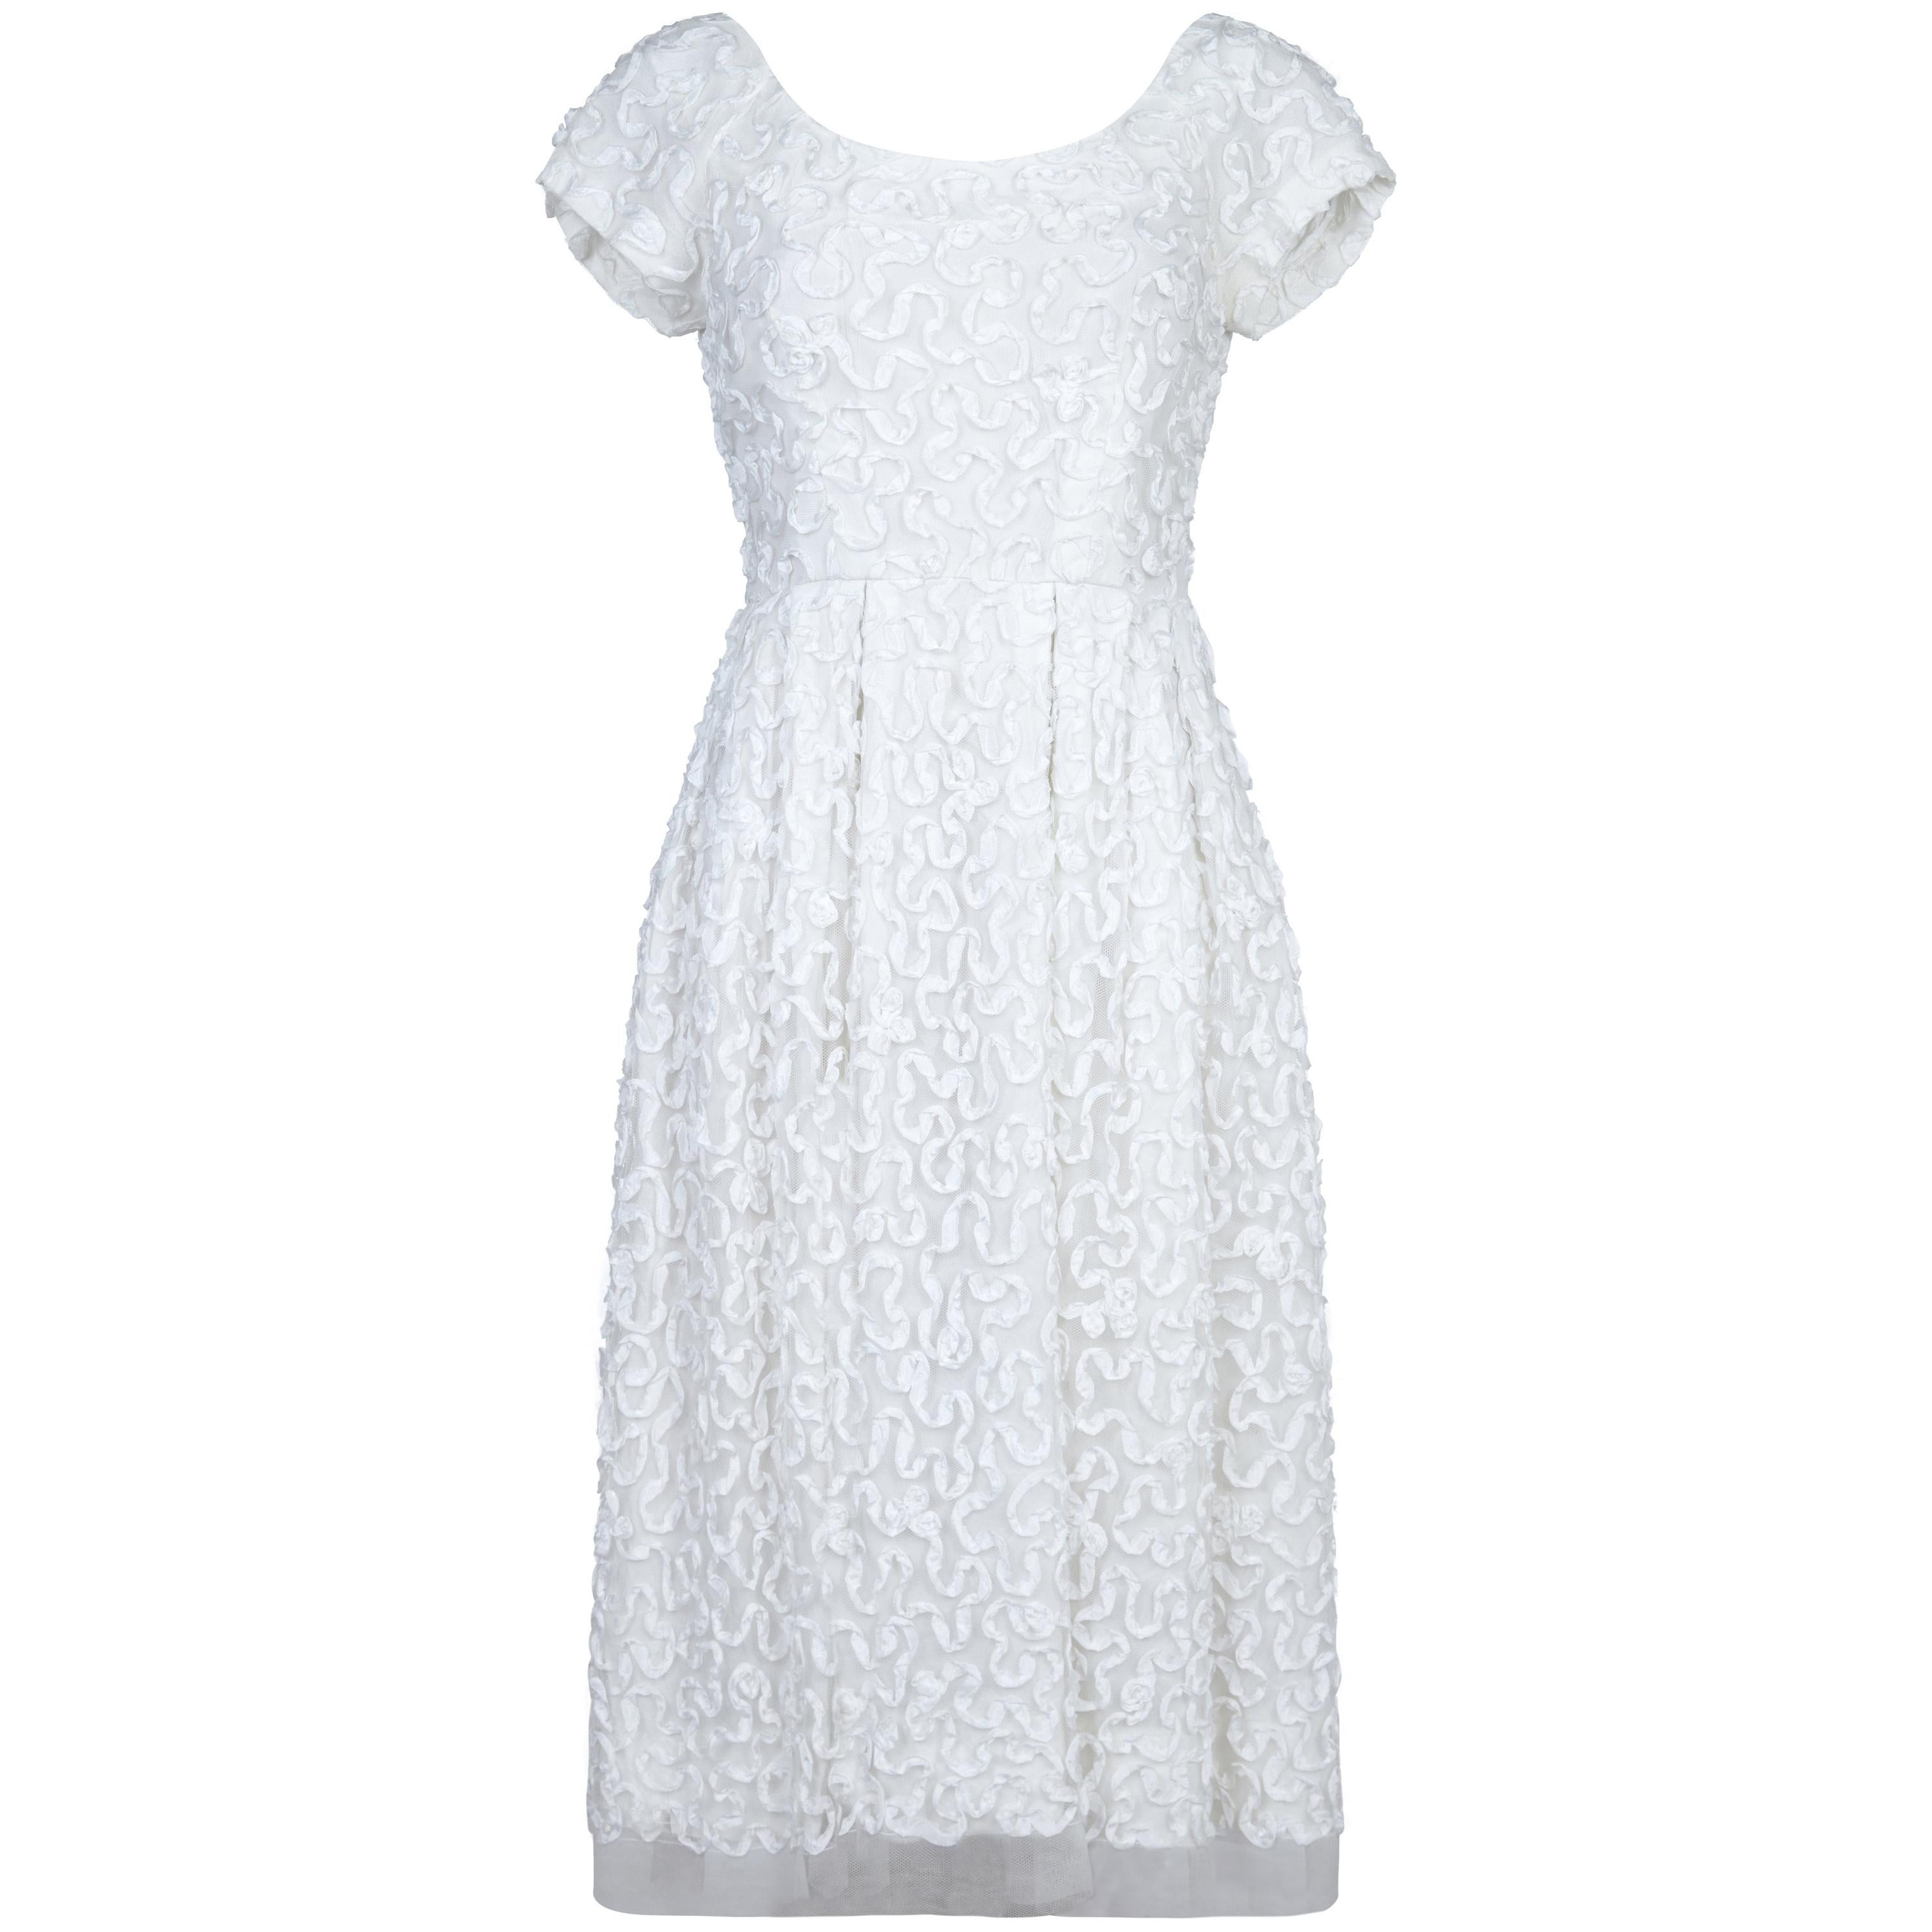 Diana Warren robe en tulle blanc avec appliqué ruban, années 1950 en vente